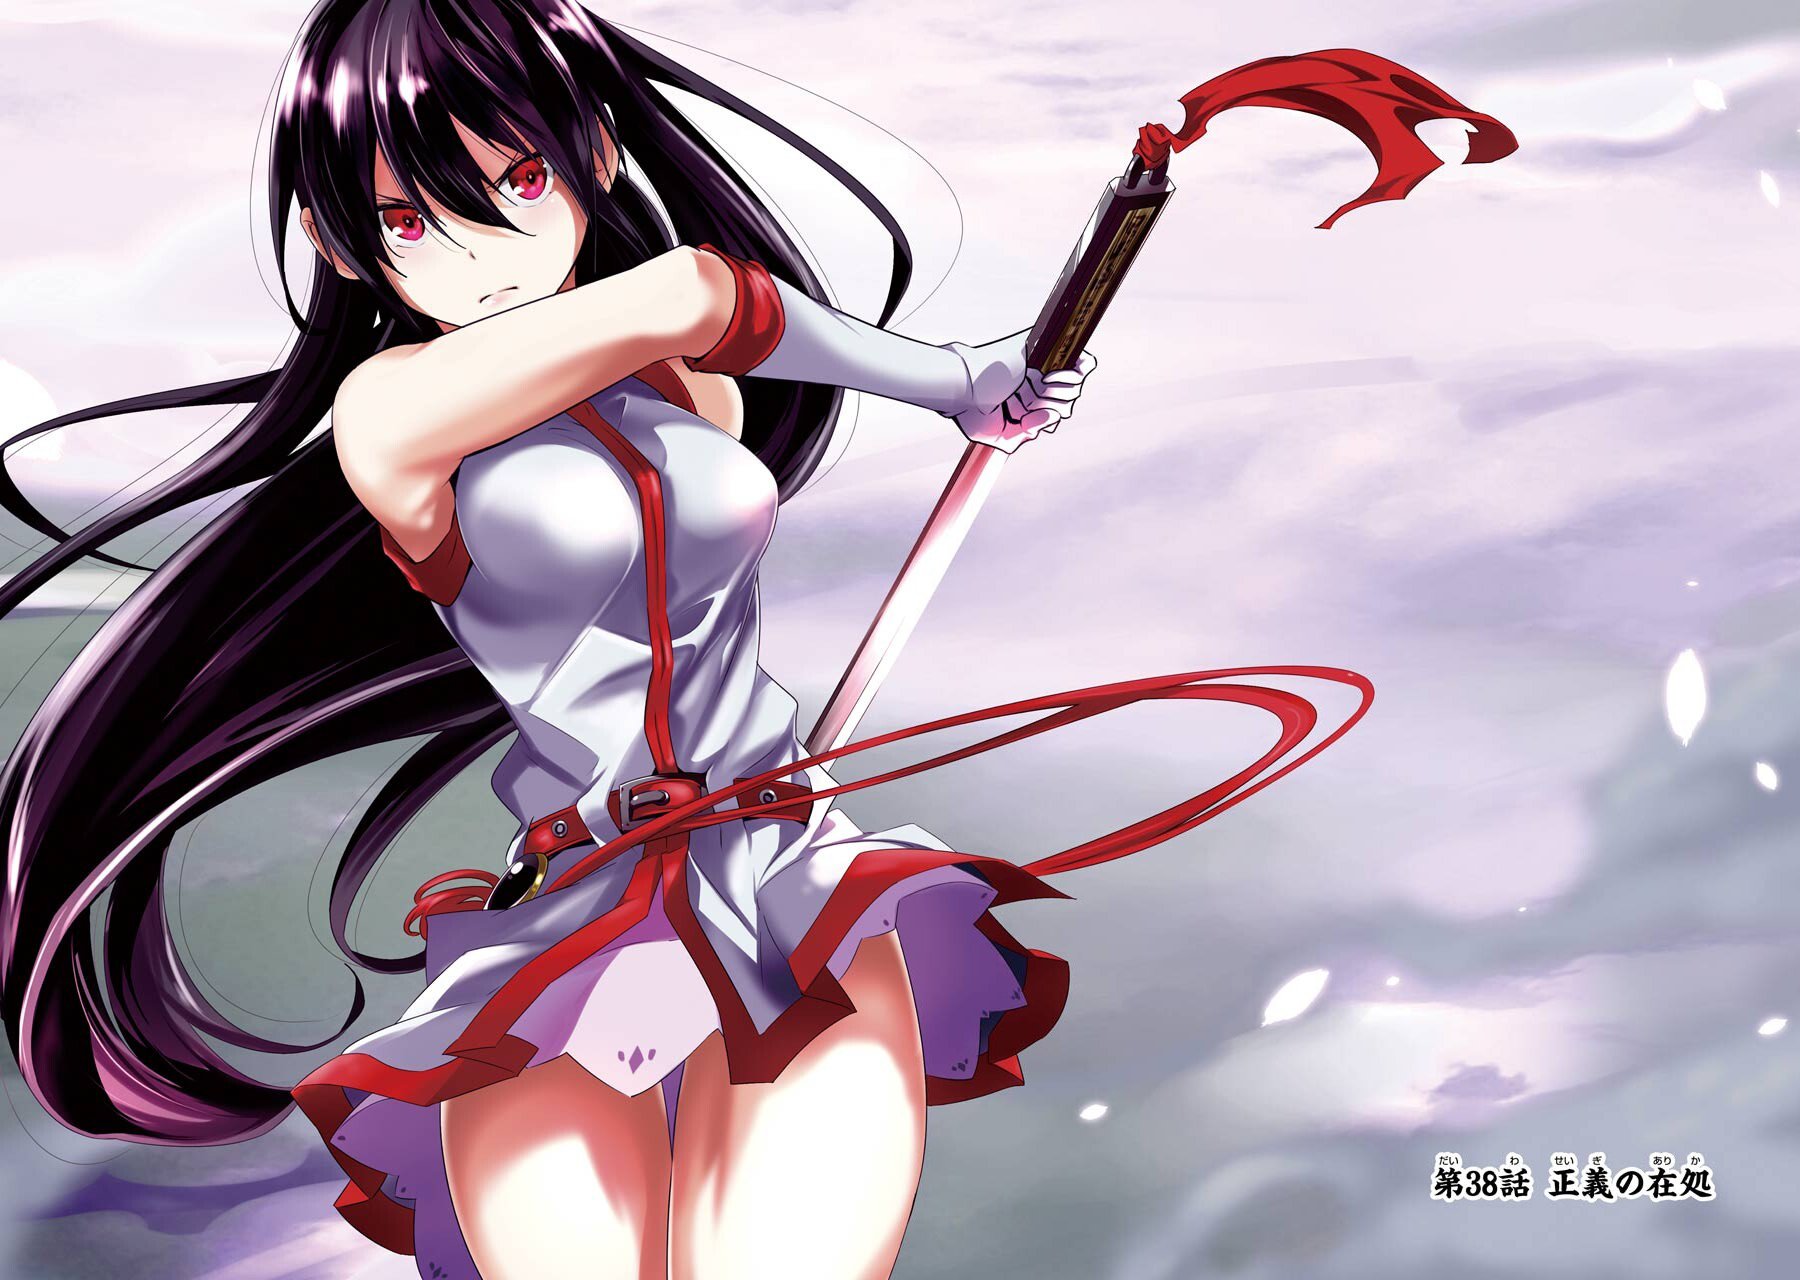  Akame  ga  Kill  Wallpaper  and Background Image 1800x1280 